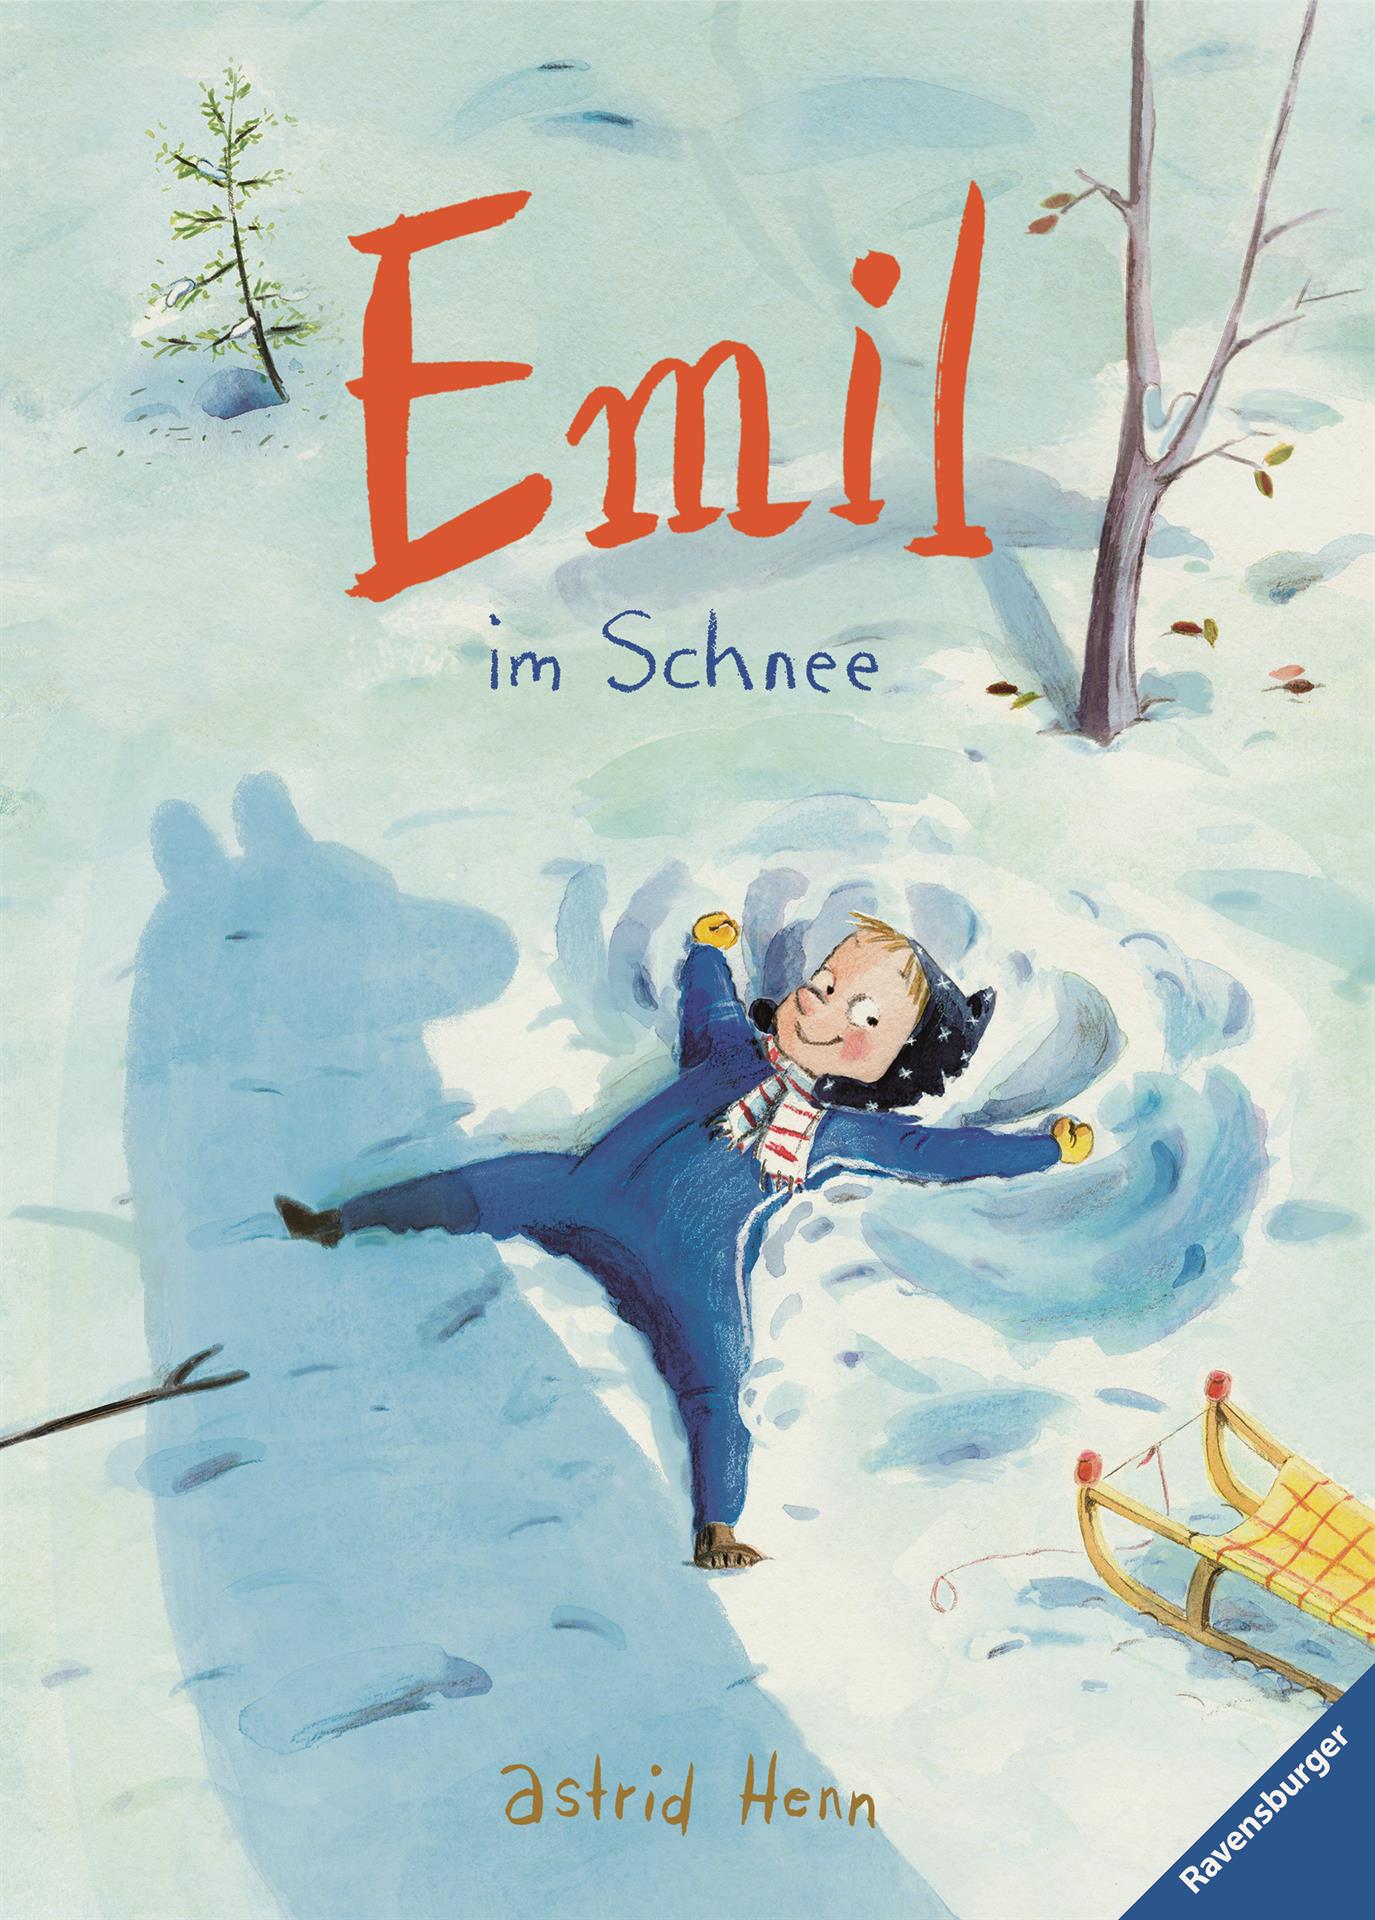 Bilderbuchkino "Emil im Schnee"